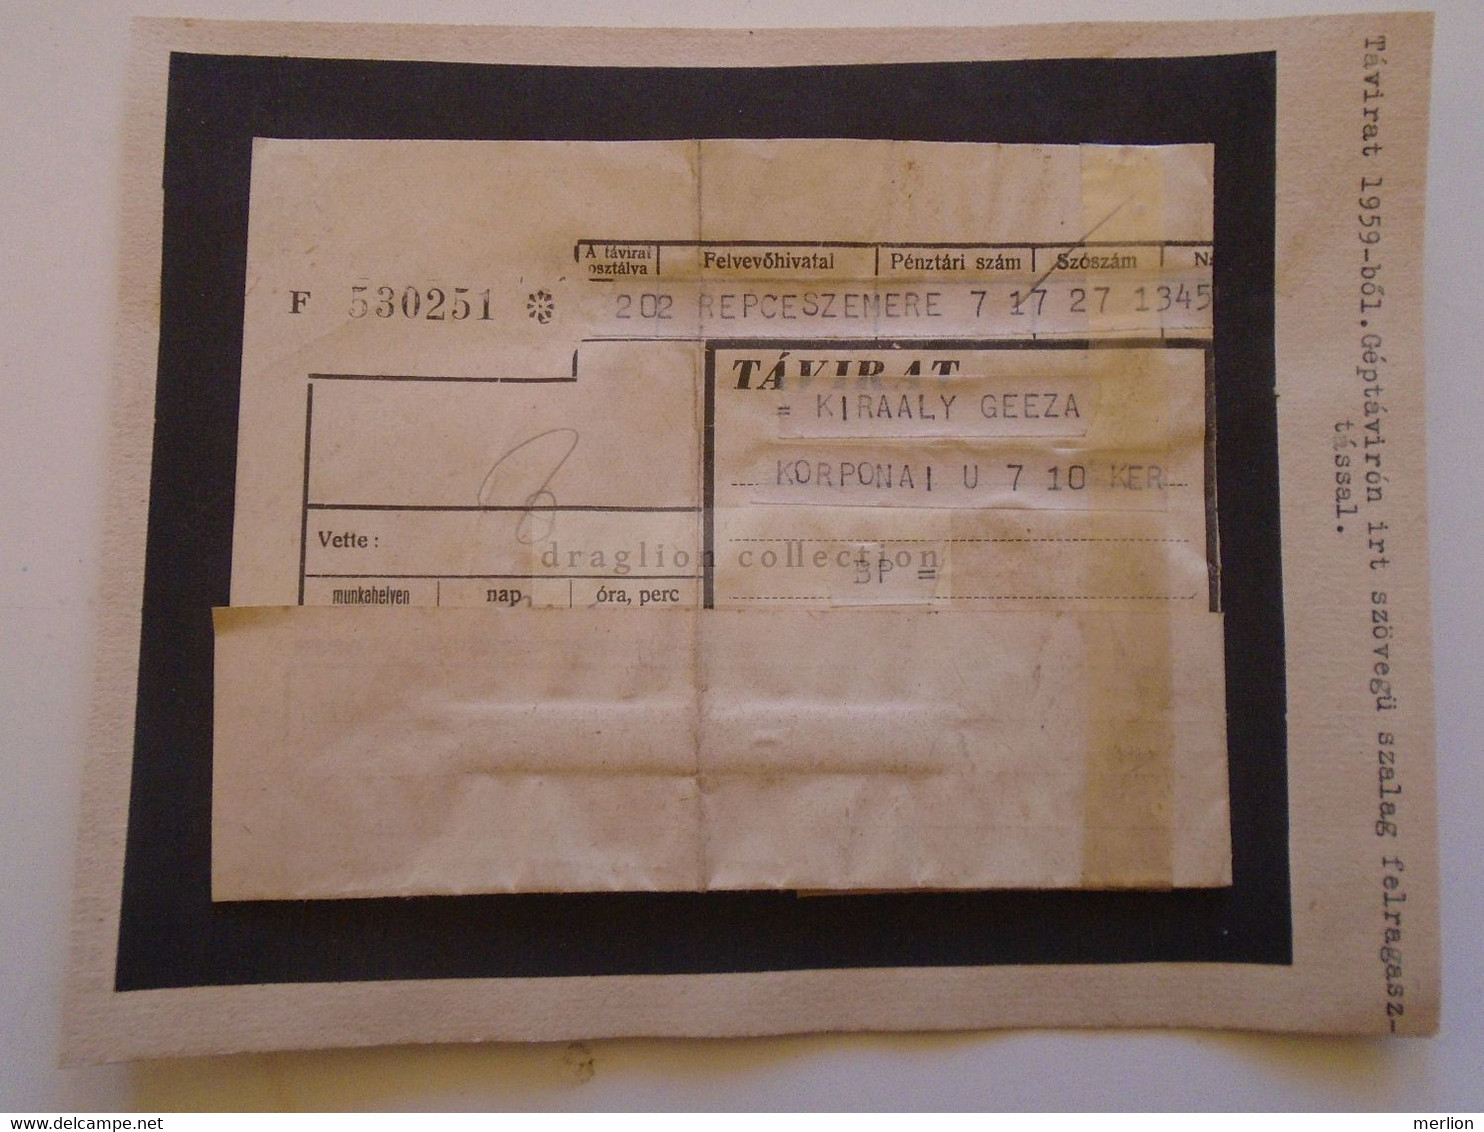 ZA120.2  HUNGARY  Tavirat Telegraph Telegram Répceszemere  1959 - Telegraph